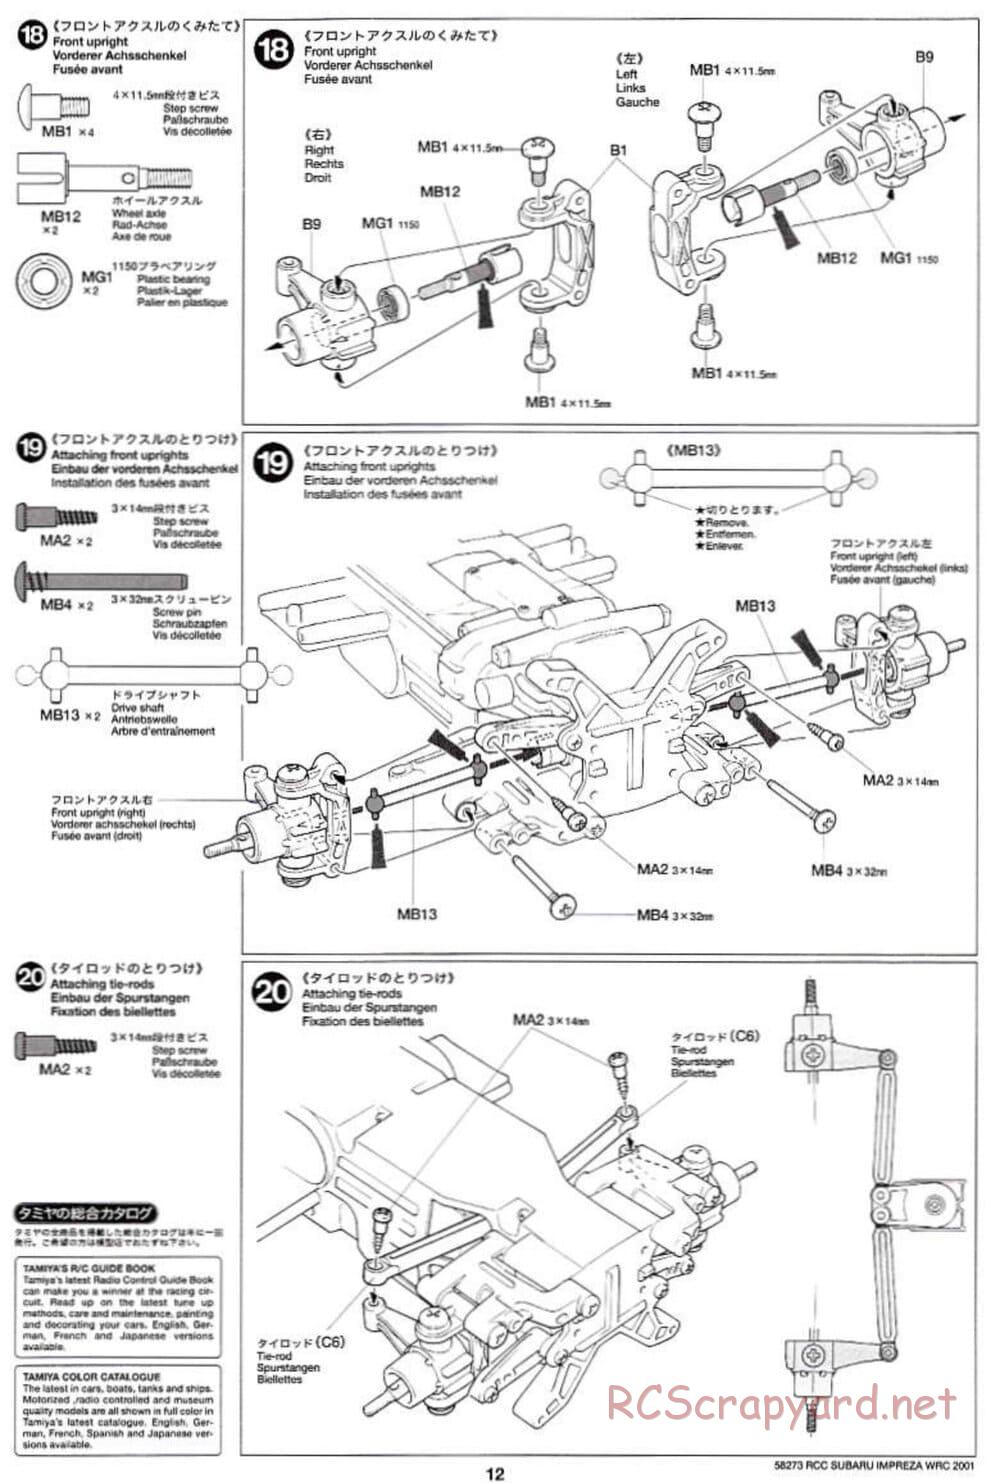 Tamiya - Subaru Impreza WRC 2001 - TL-01 Chassis - Manual - Page 12